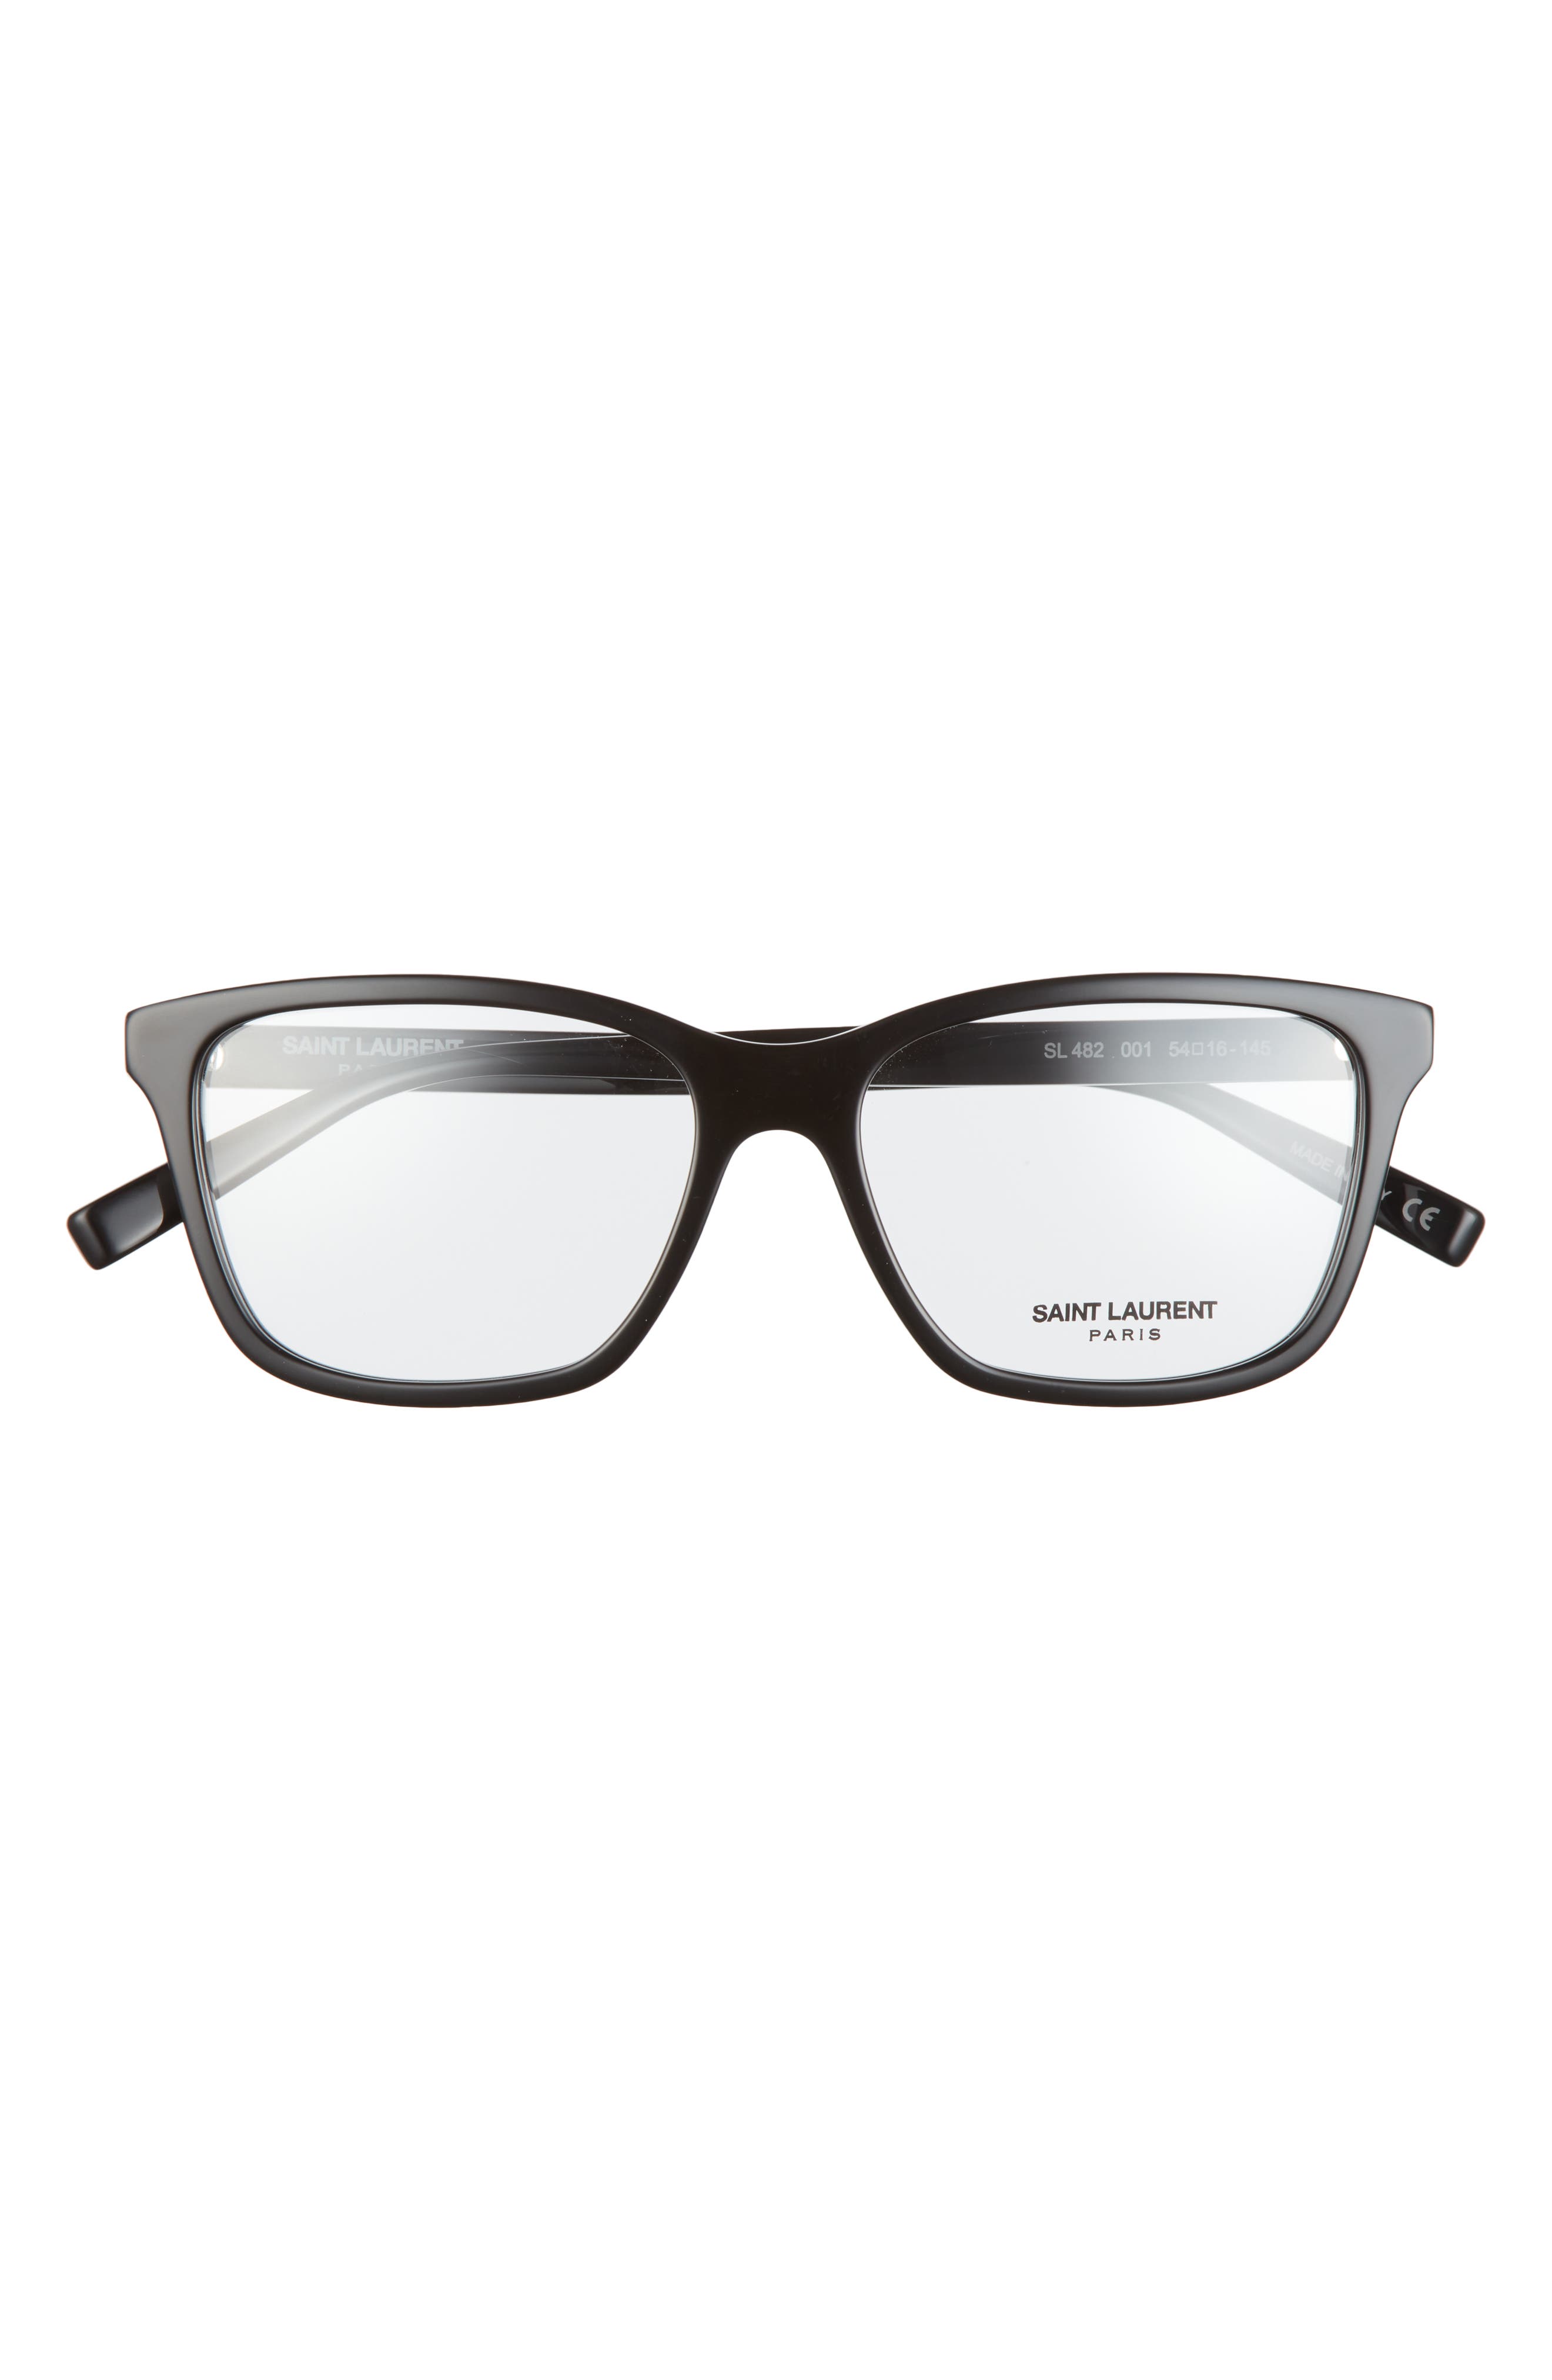 Saint Laurent 54mm Rectangular Optical Glasses in Black at Nordstrom